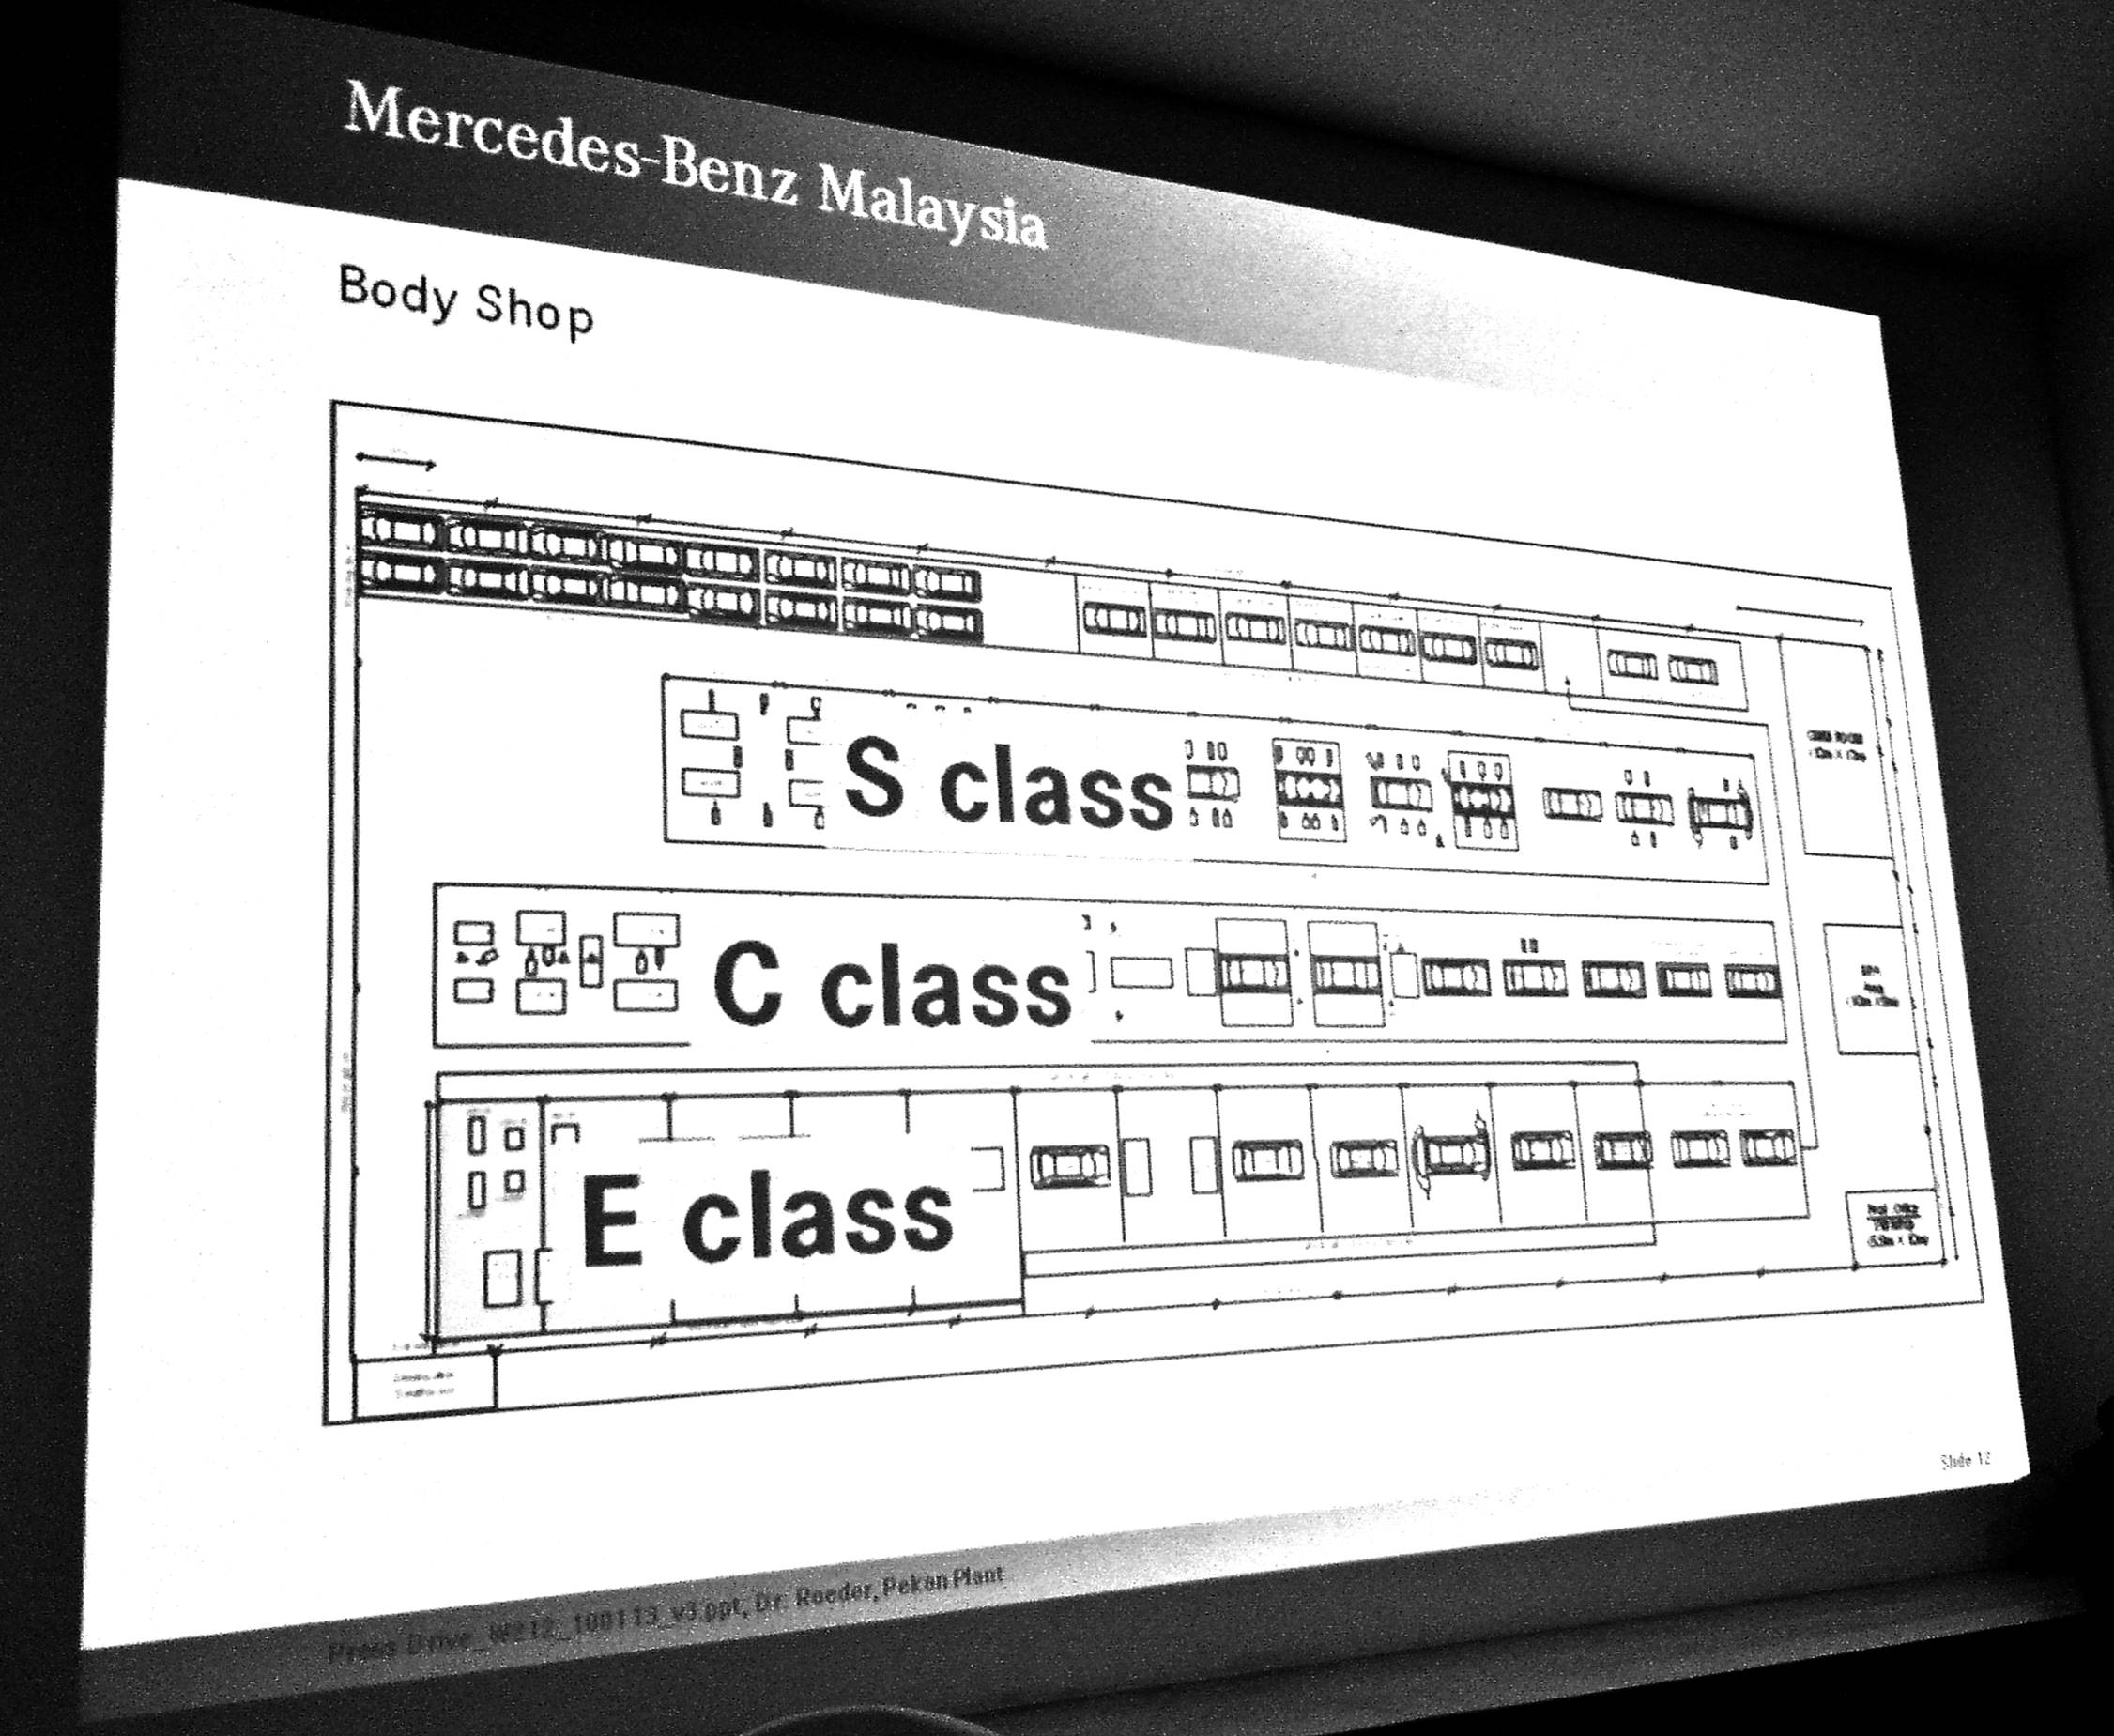 Mercedes-Benz Malaysia Pekan plant